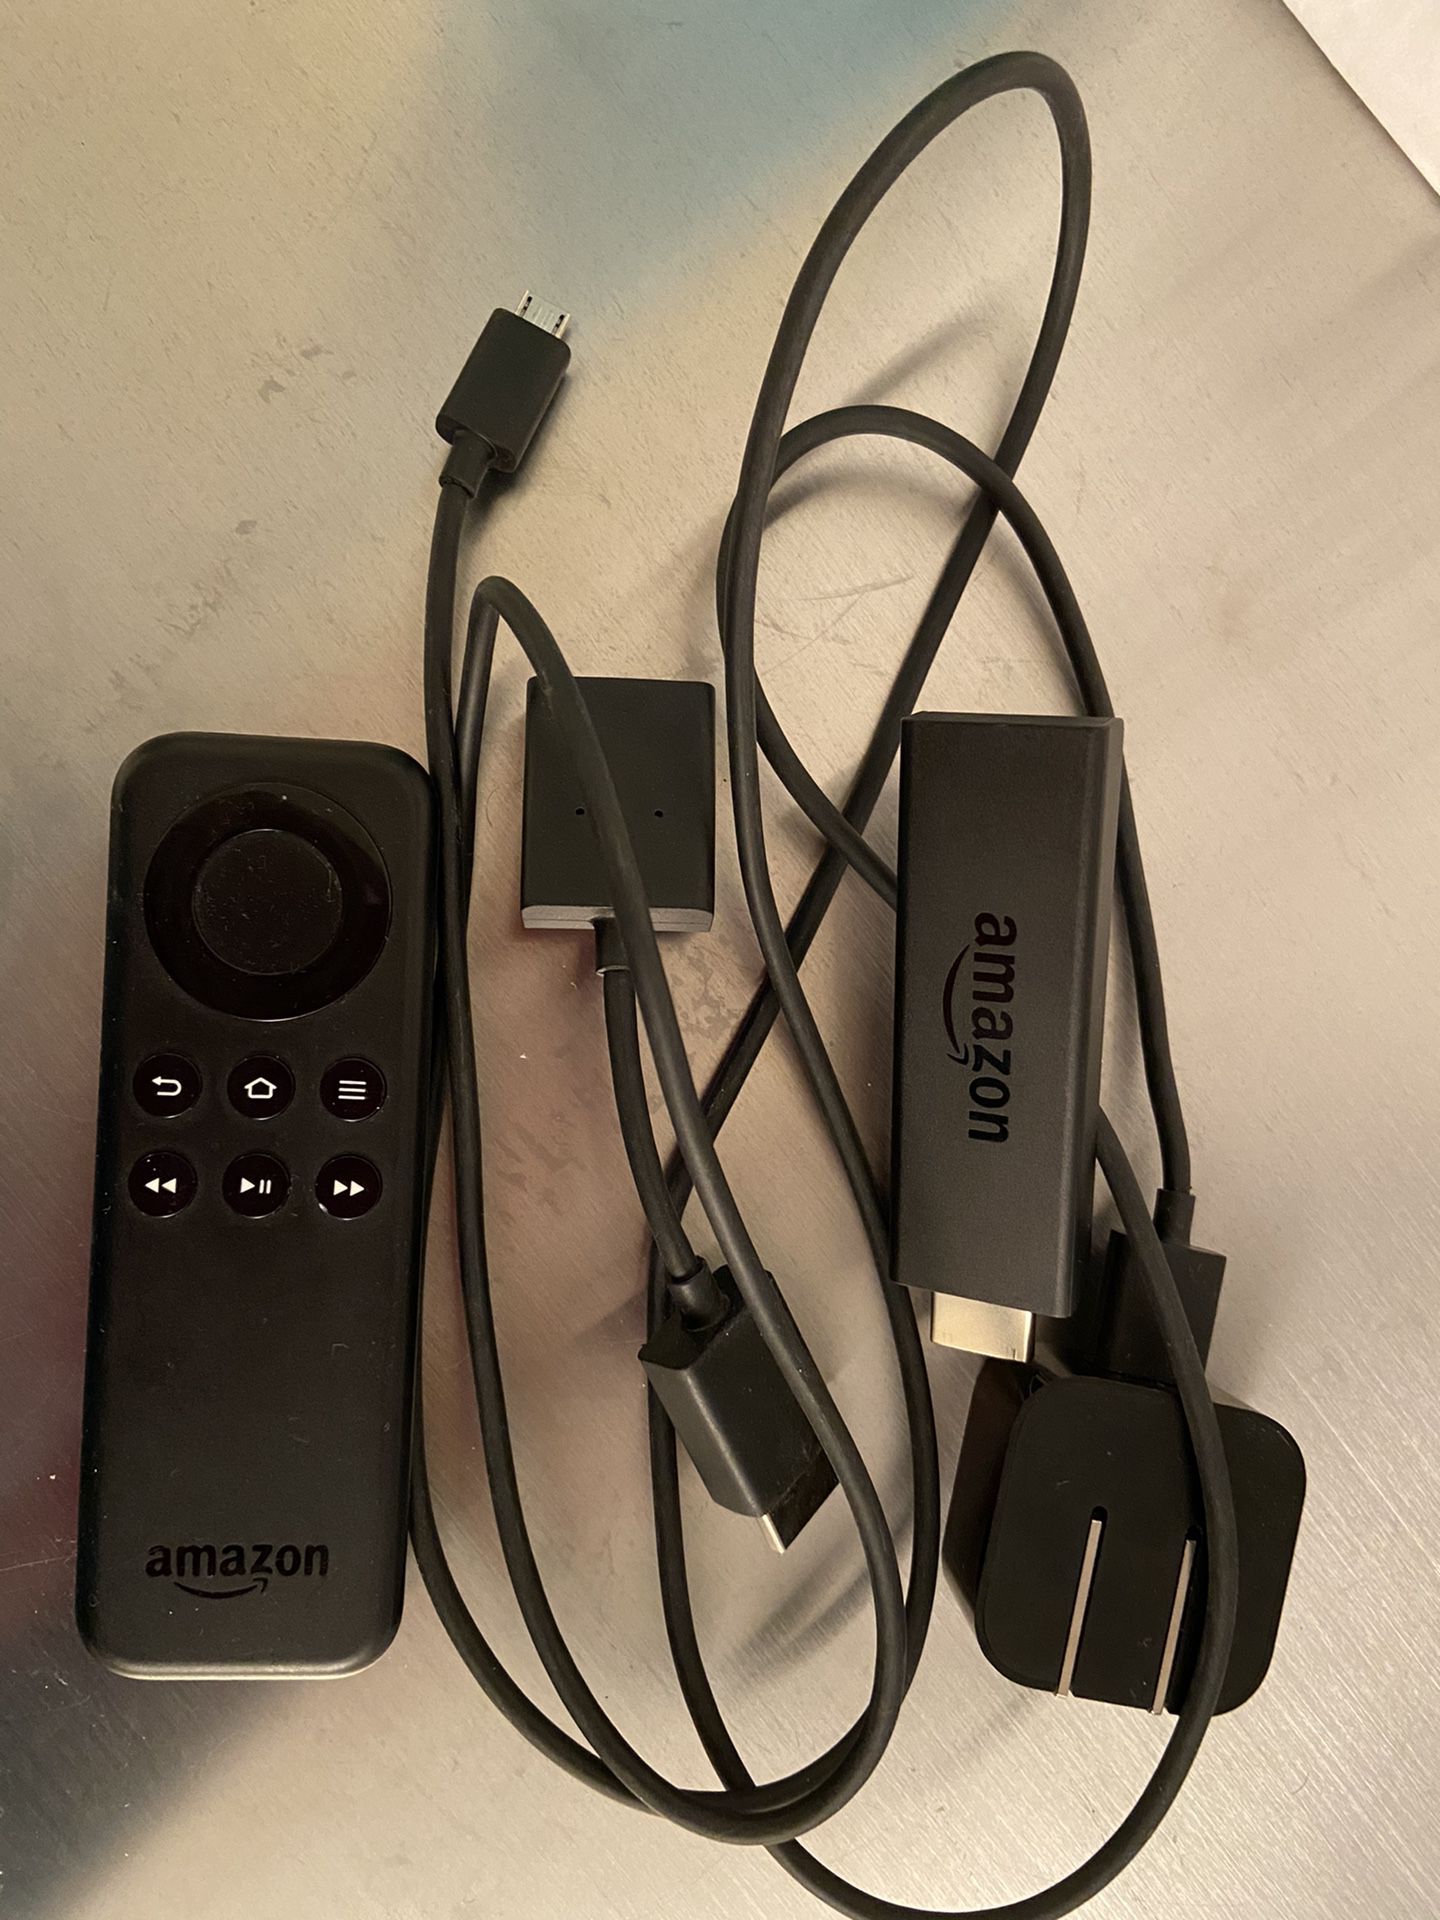 Amazon Fire TV Stick - 1st gen